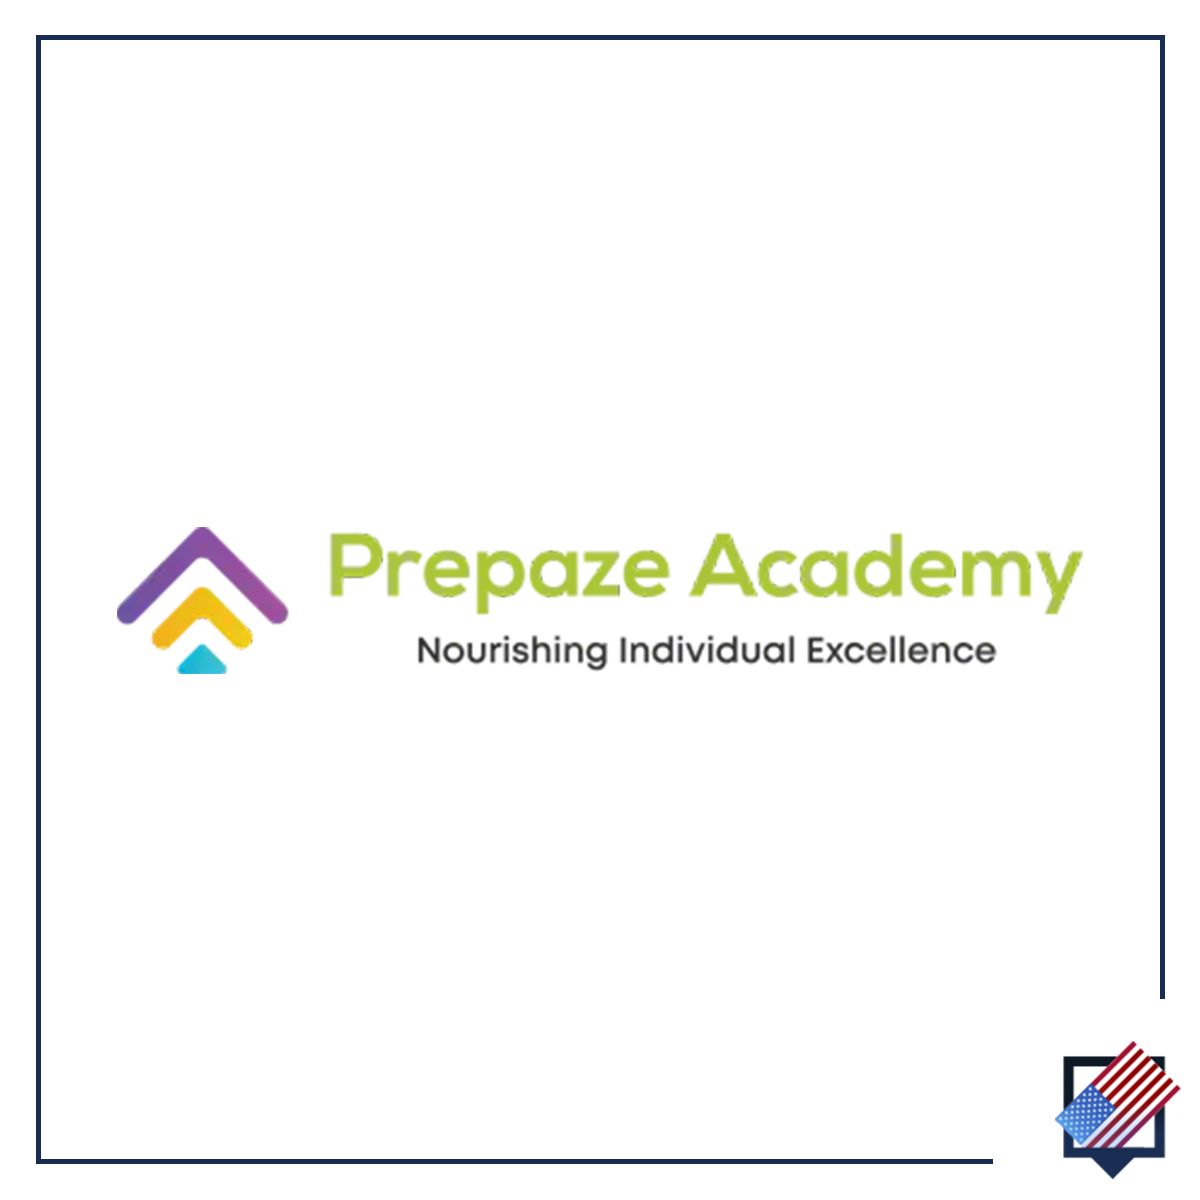 Prepaze Academy